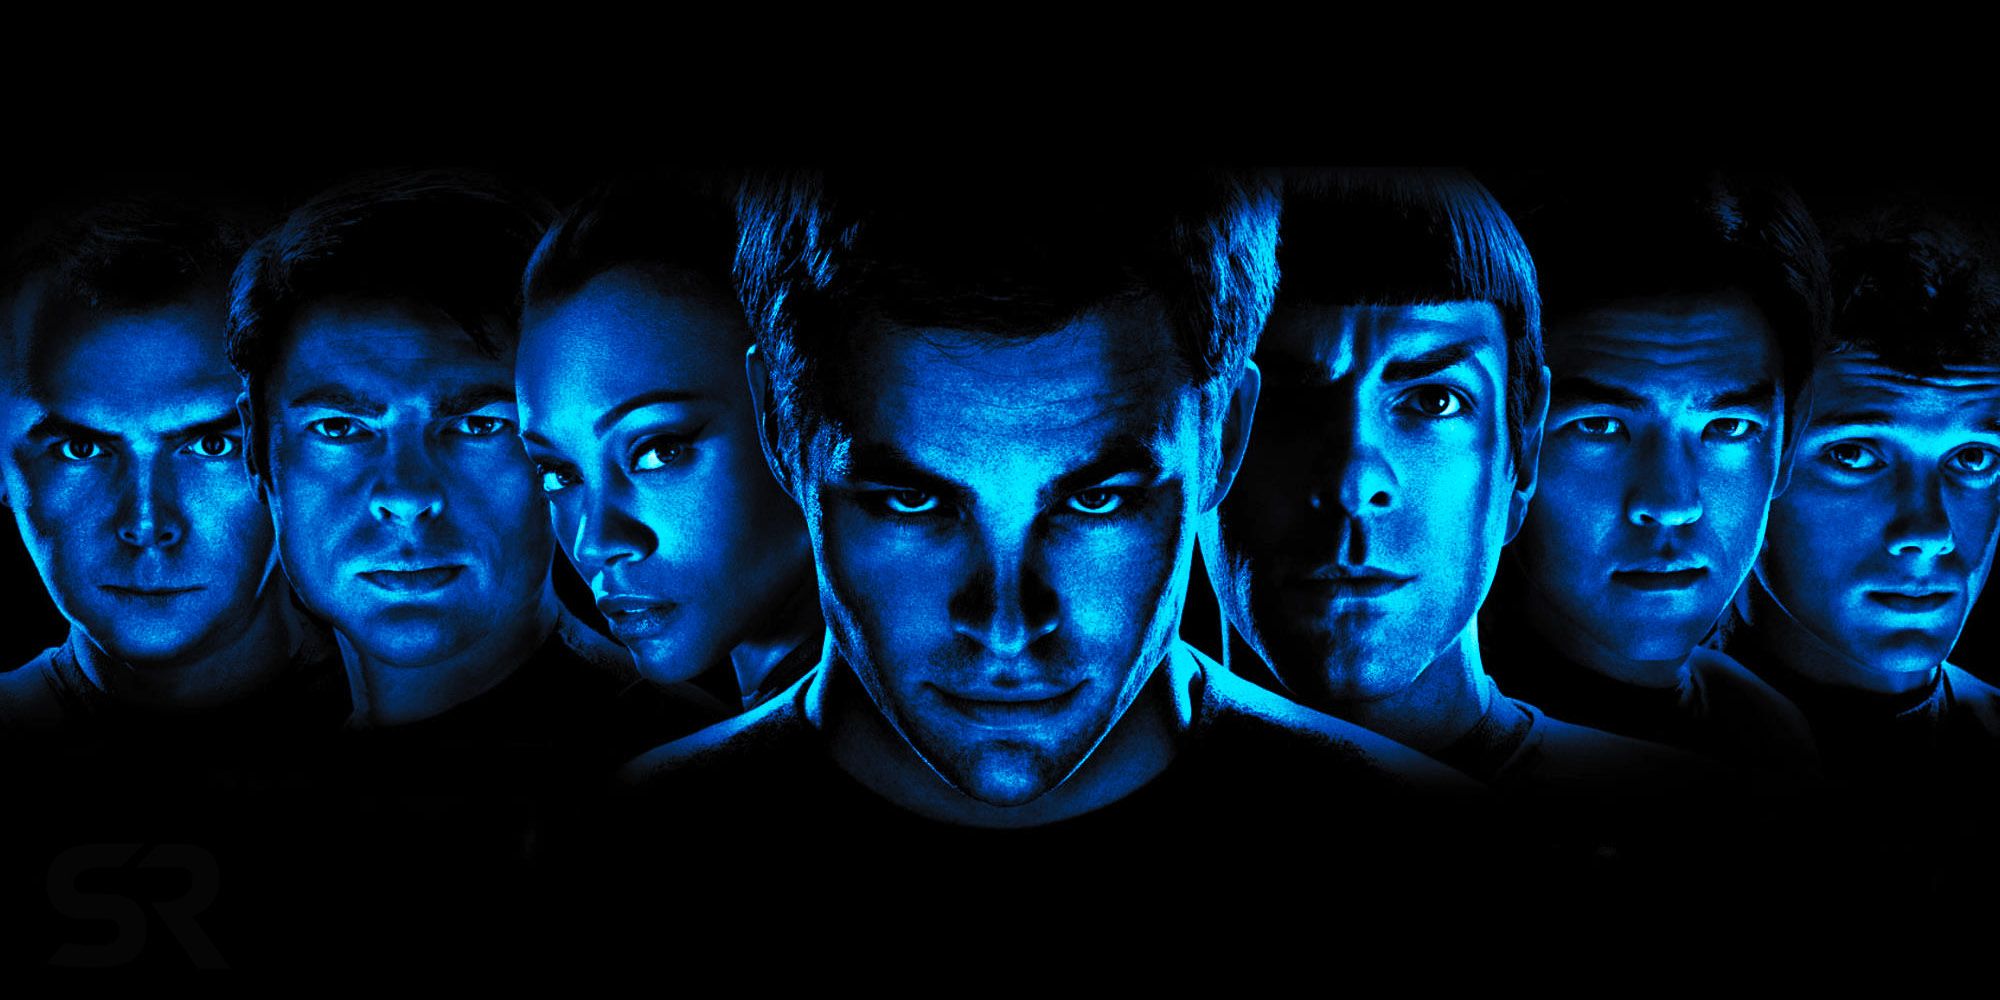 Nicolas Cage Talks Star Trek Movie Hopes: “I Want To Be On The Enterprise”